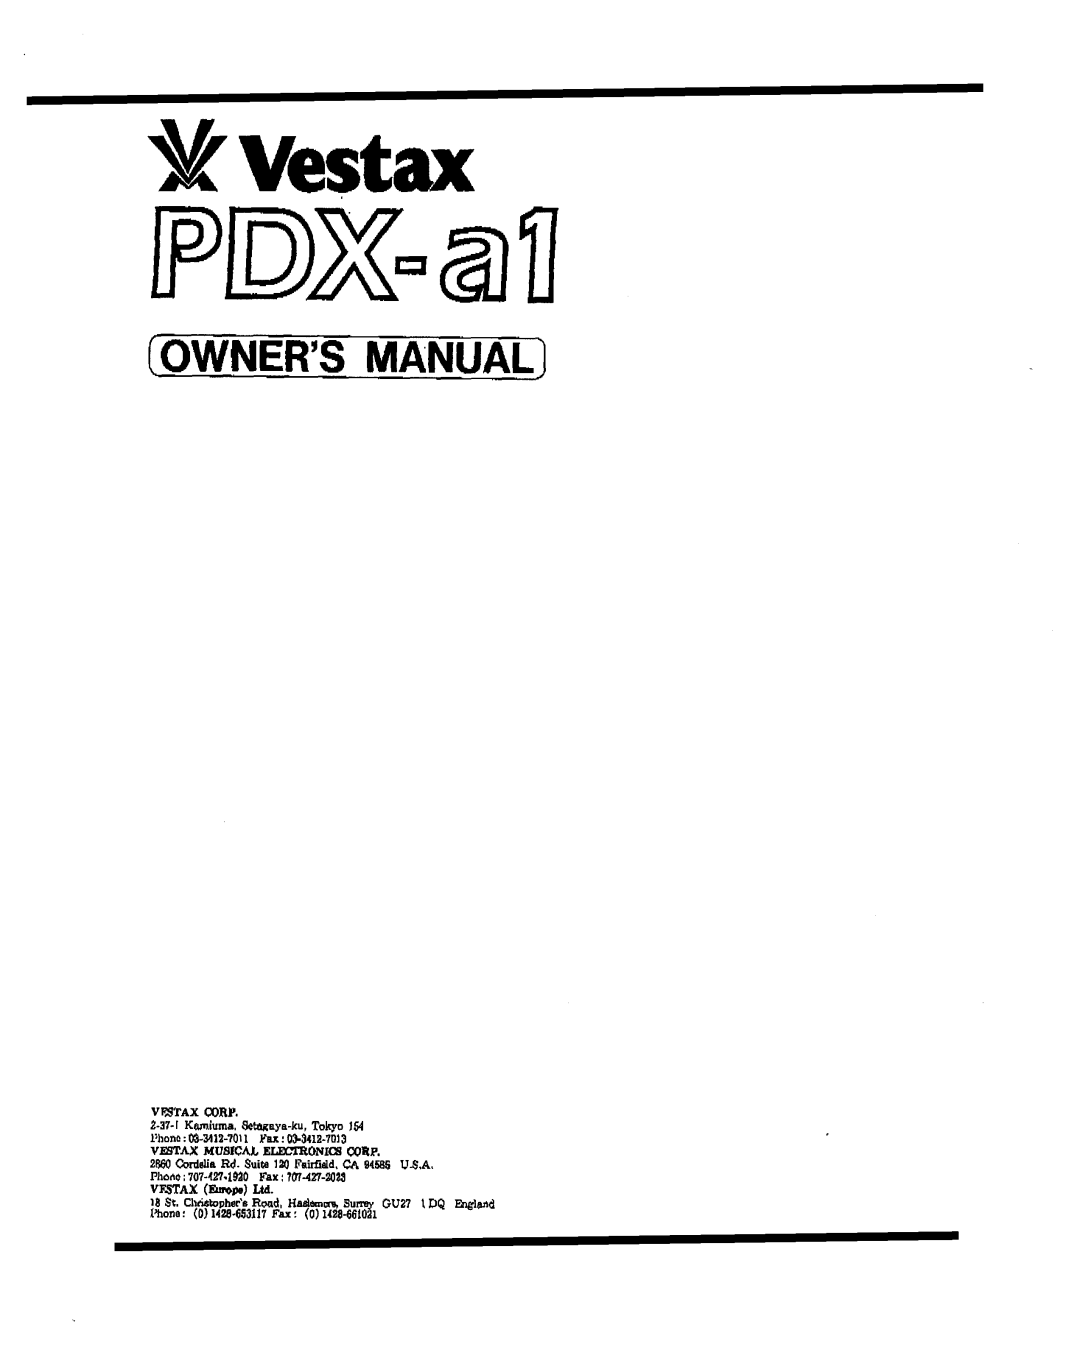 Vestax PDX-a1 manual Om~Iers Manual 